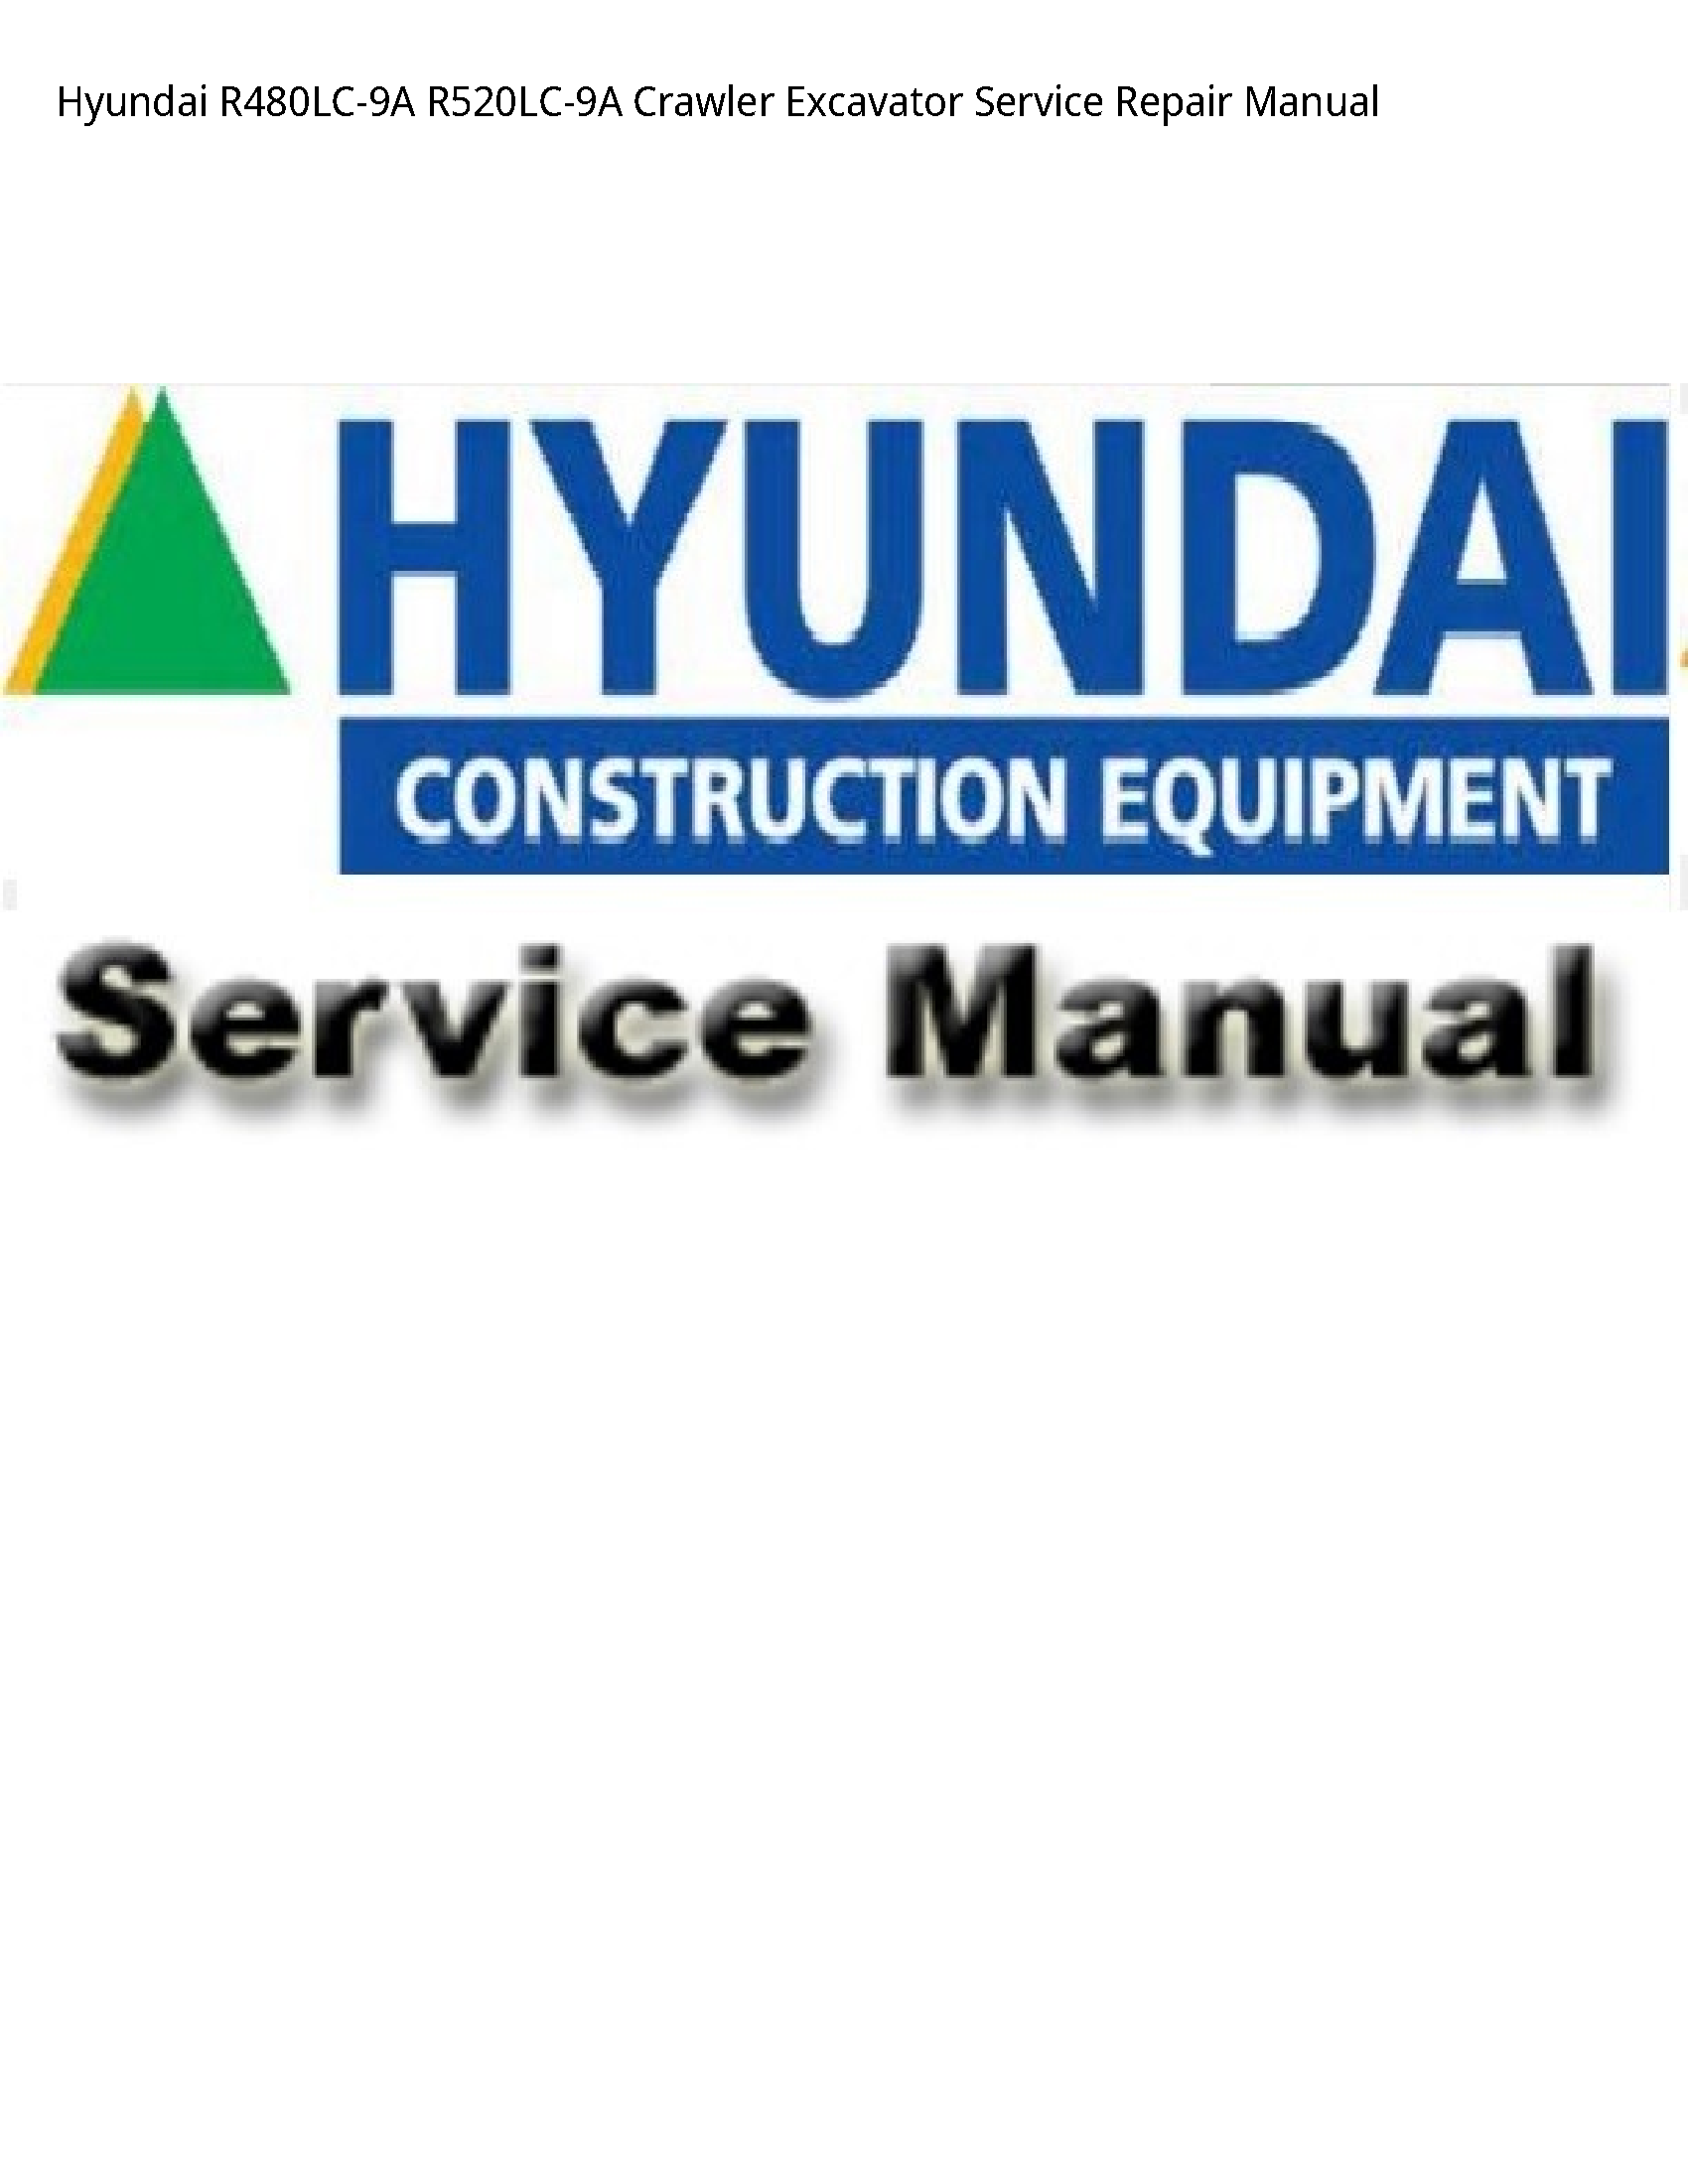 Hyundai R480LC-9A Crawler Excavator manual